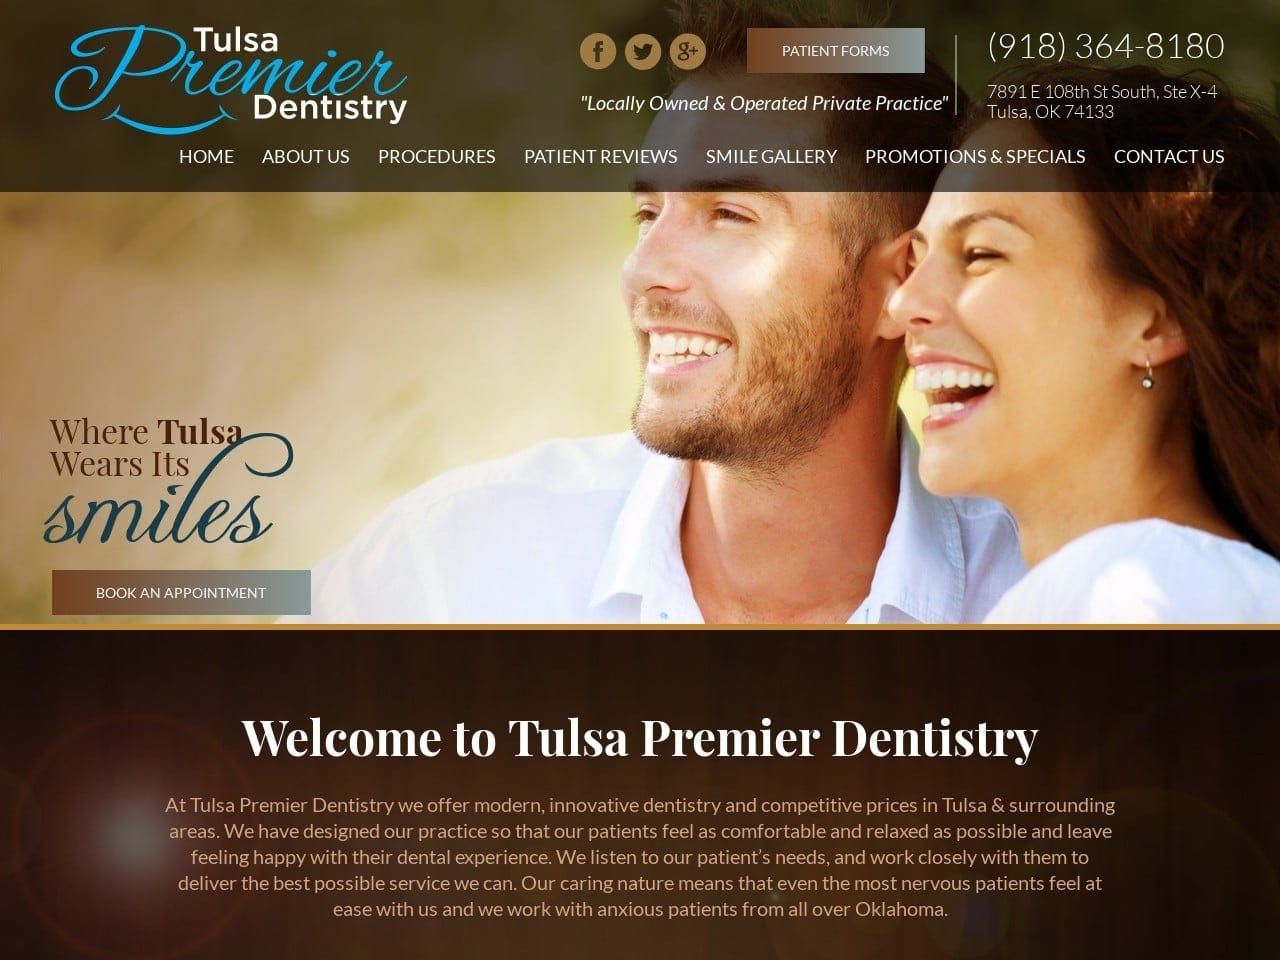 Tulsa Premier Dentistry Website Screenshot From Url Tulsapremierdentistry.com